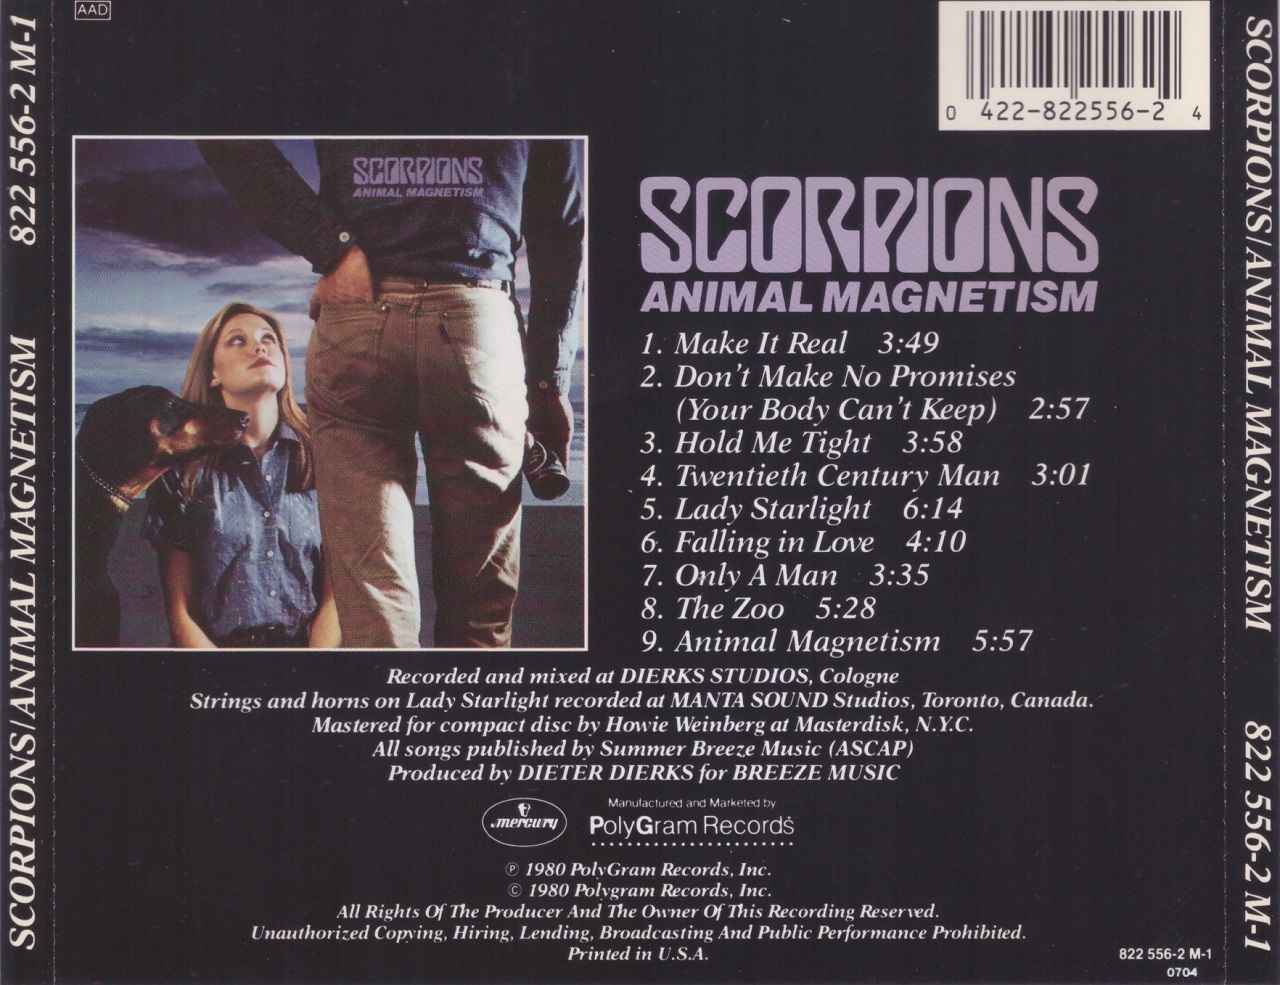 Scorpions "Animal Magnetism" .